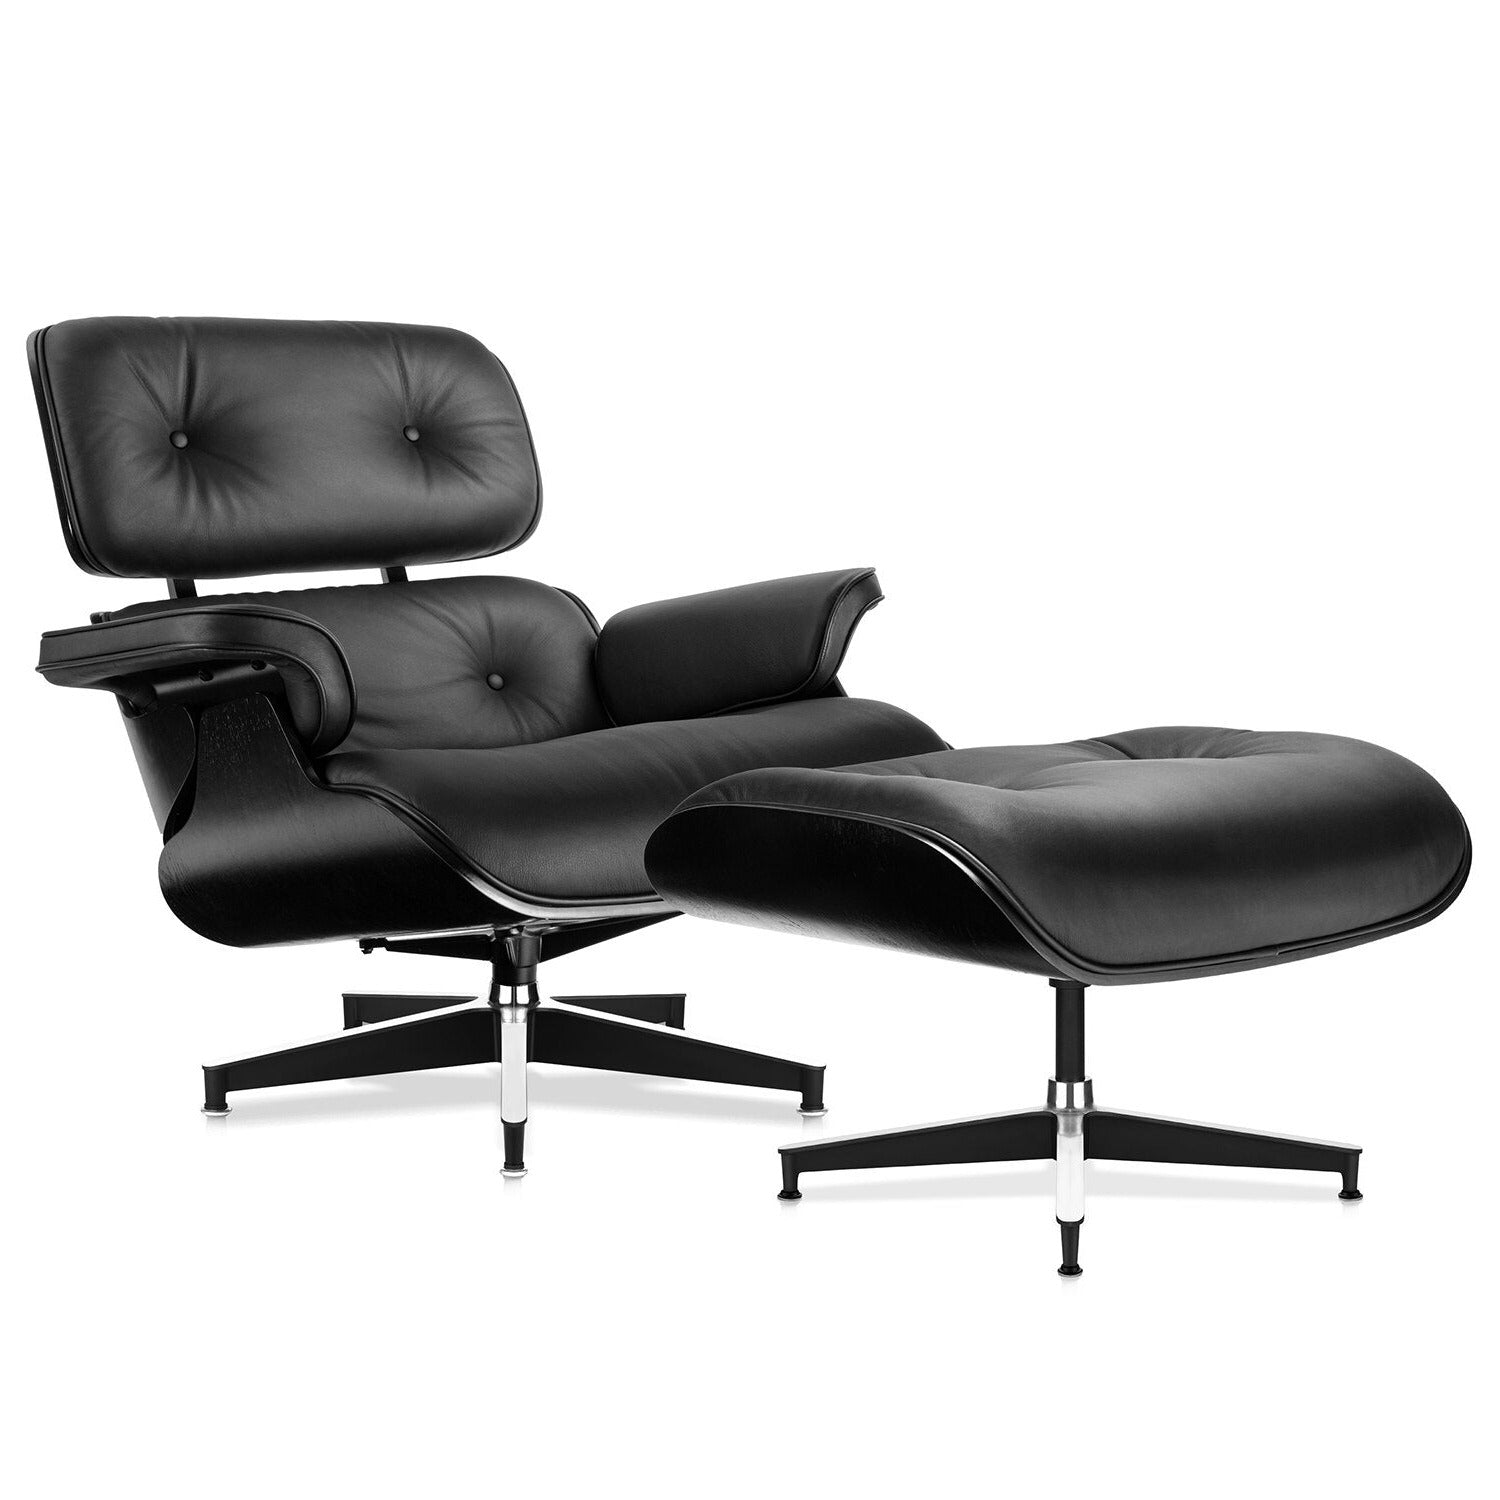 Homio Decor Living Room Black Ashwood Classic Leather Lounge Chair with Ottoman